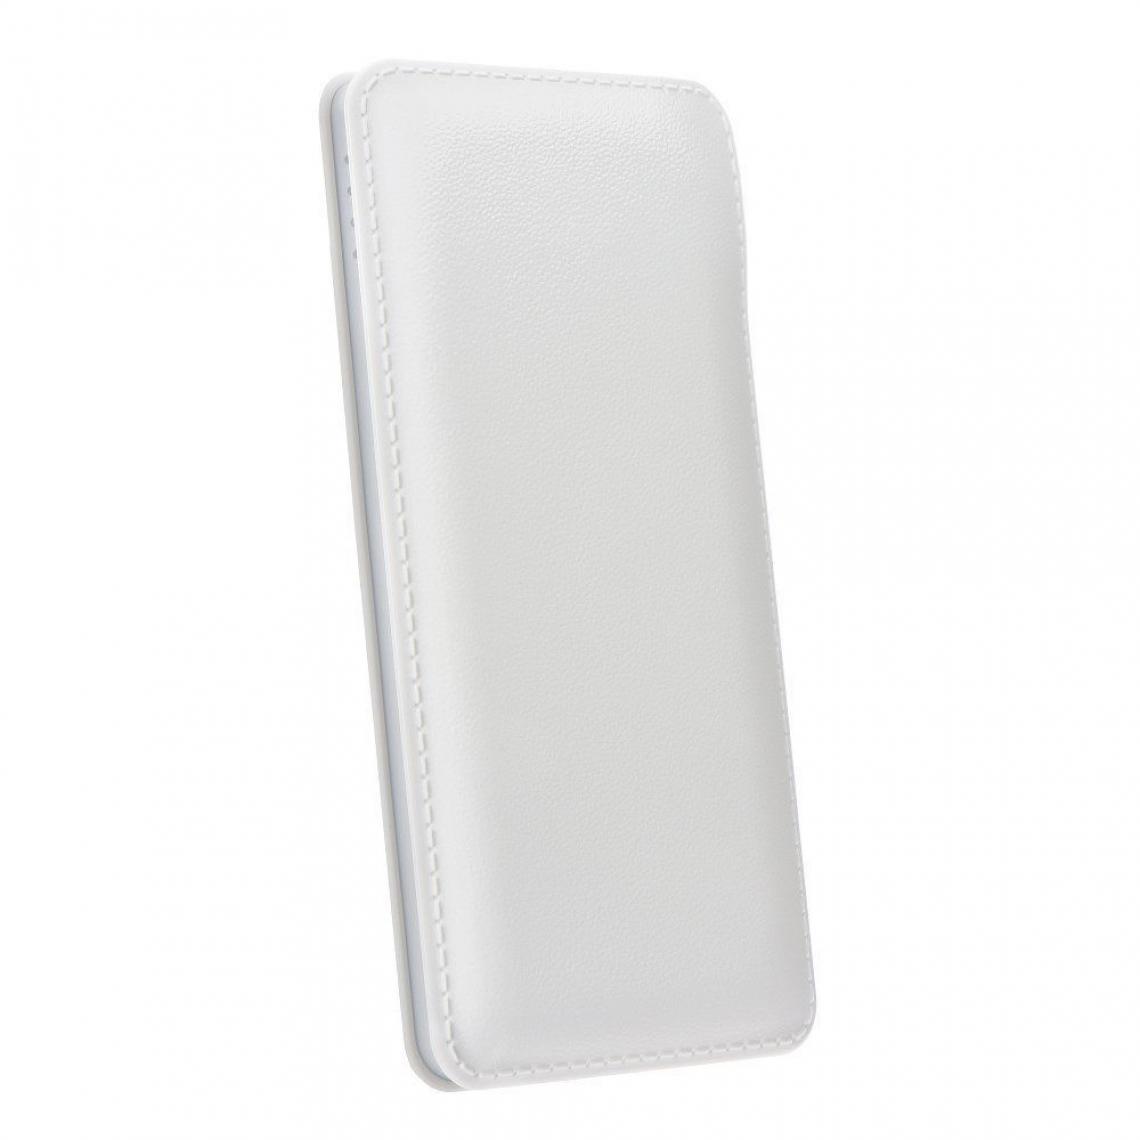 Ozzzo - Chargeur batterie externe 20000 mAh powerbank ozzzo blanc pour Acer Iconia Tab 10 B3-A30 - Autres accessoires smartphone